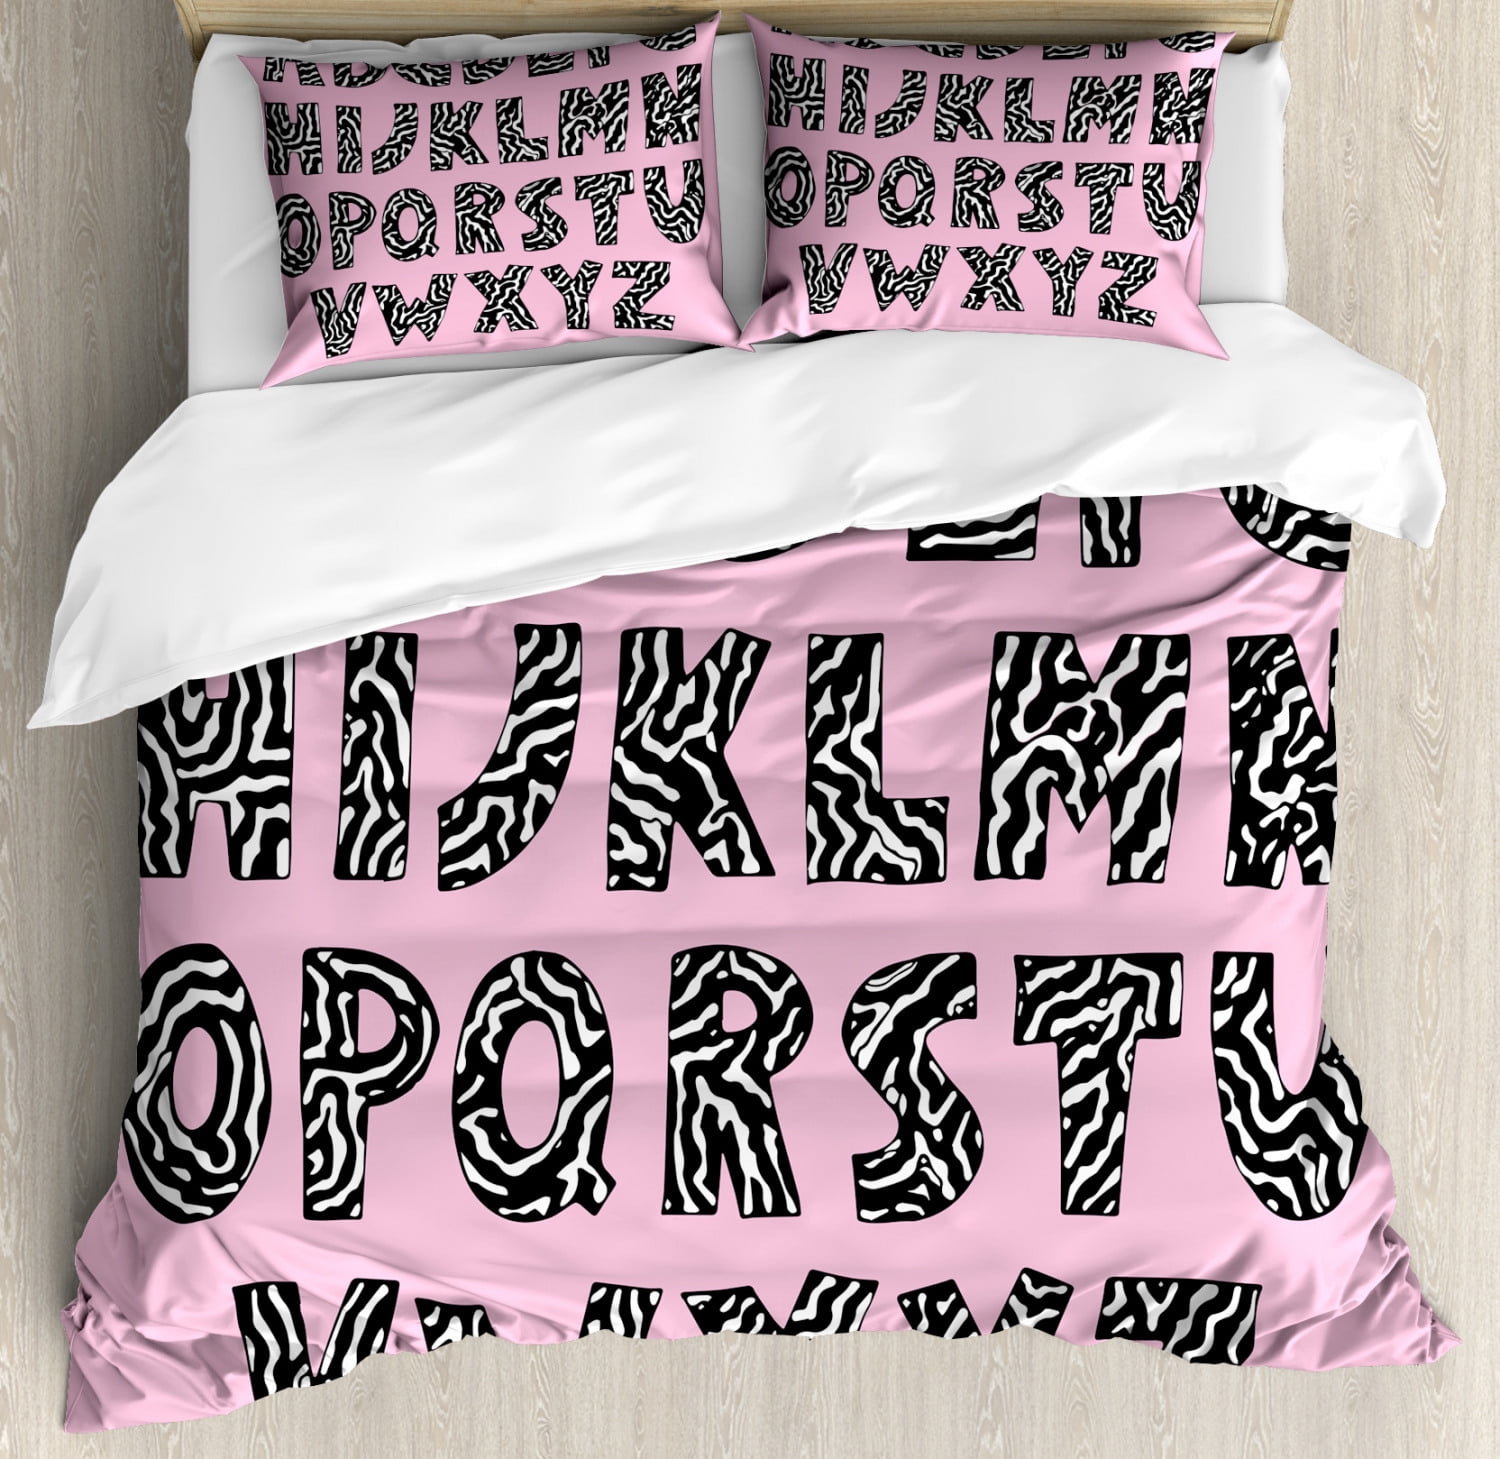 Pink Zebra King Size Duvet Cover Set Funky Letters Written In